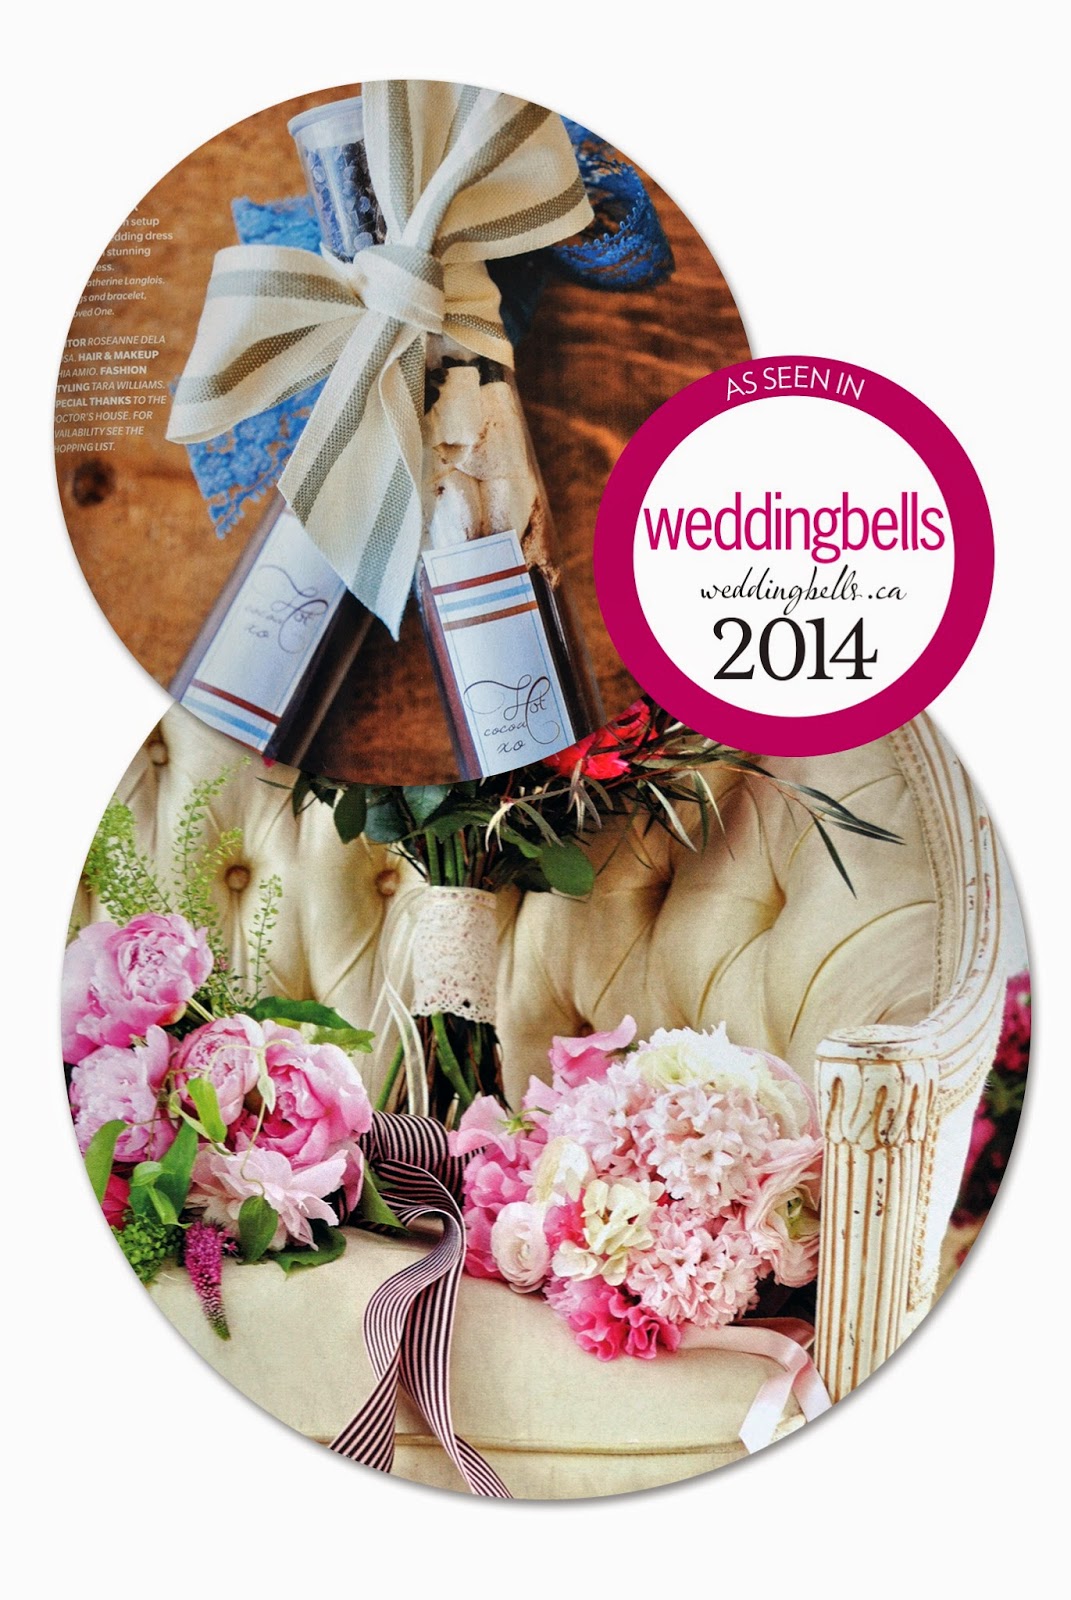 diy wedding inspiration as seen in Weddingbells magazine